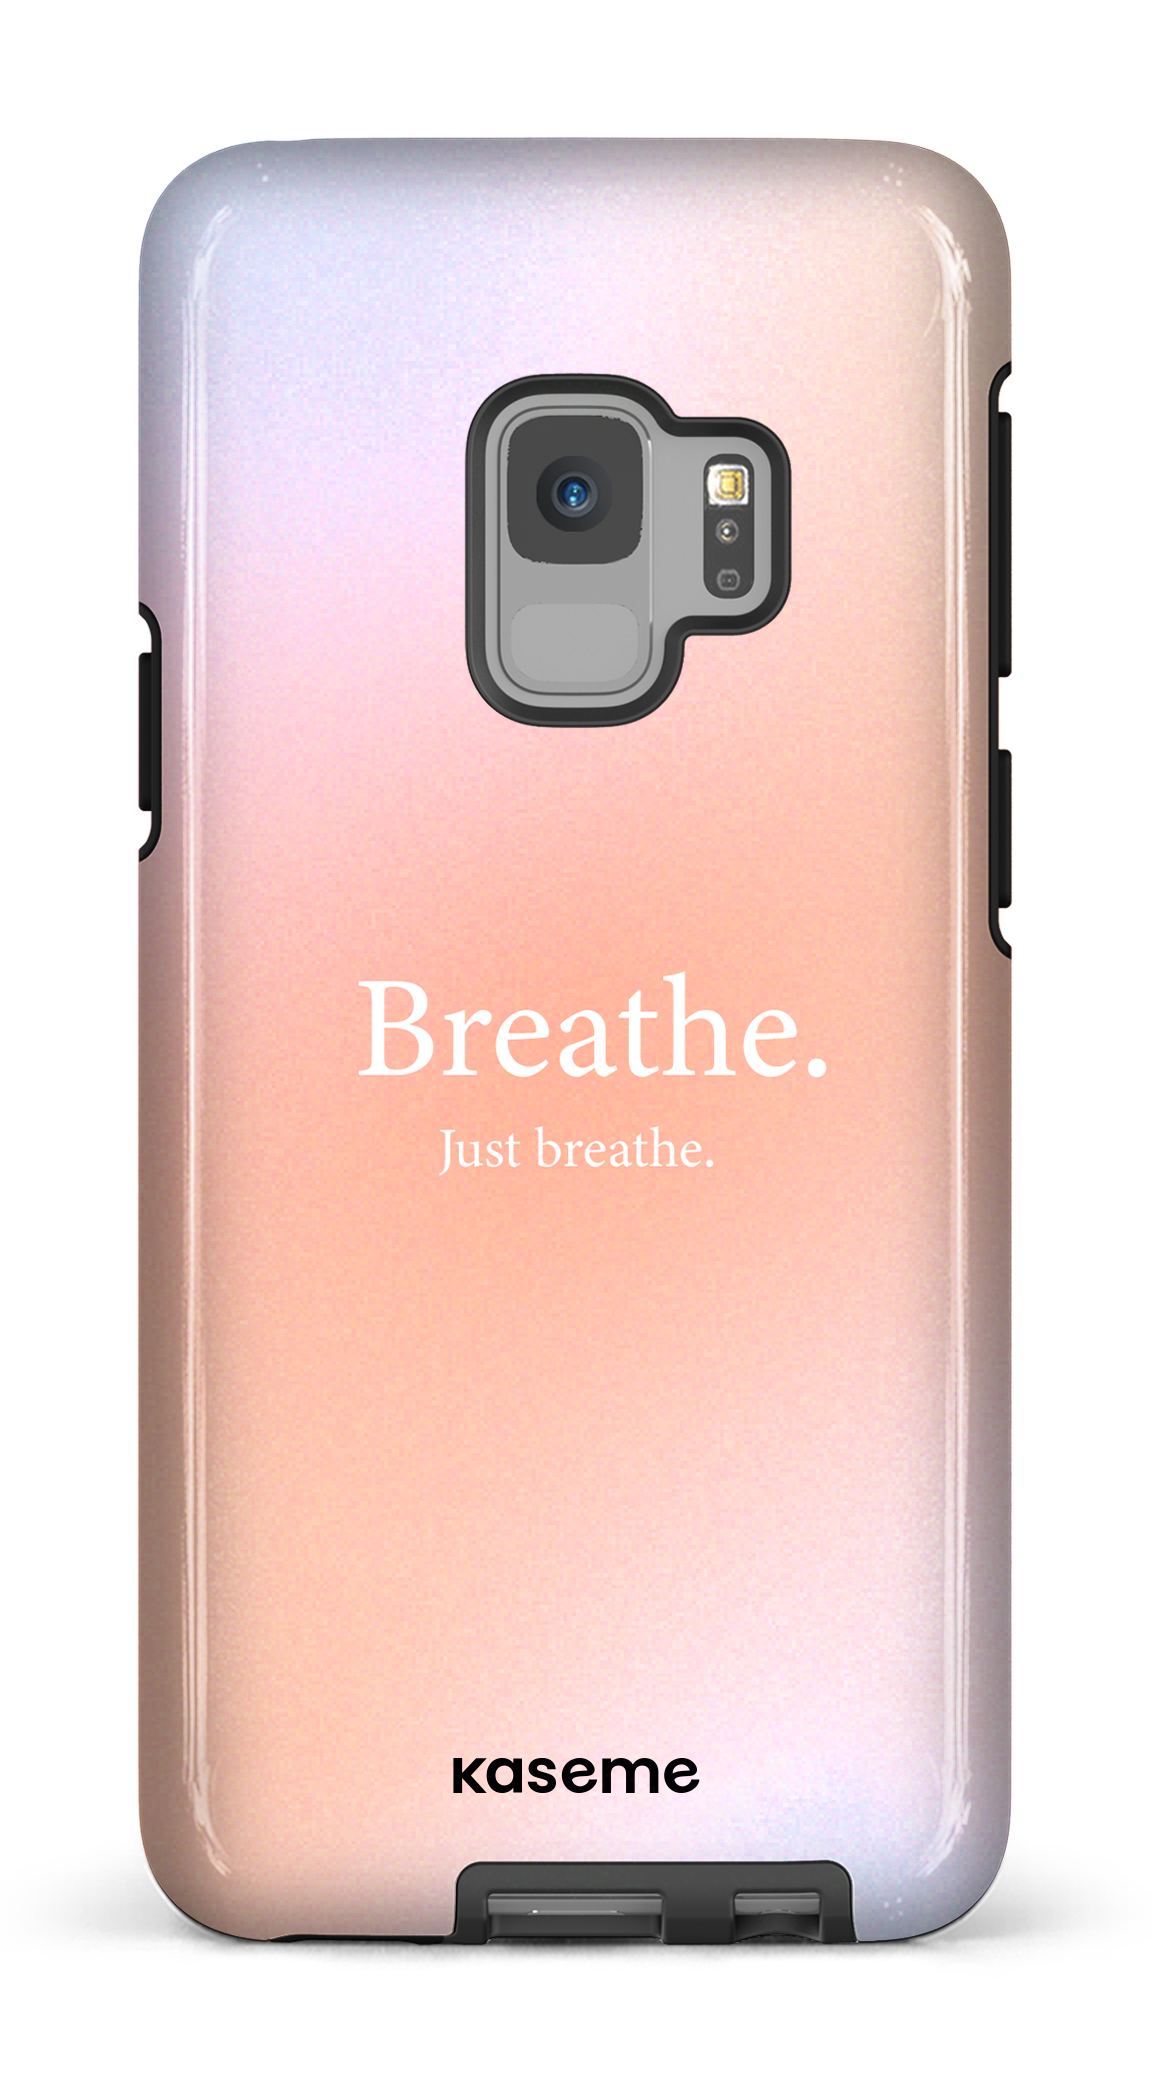 Just breathe - Galaxy S9